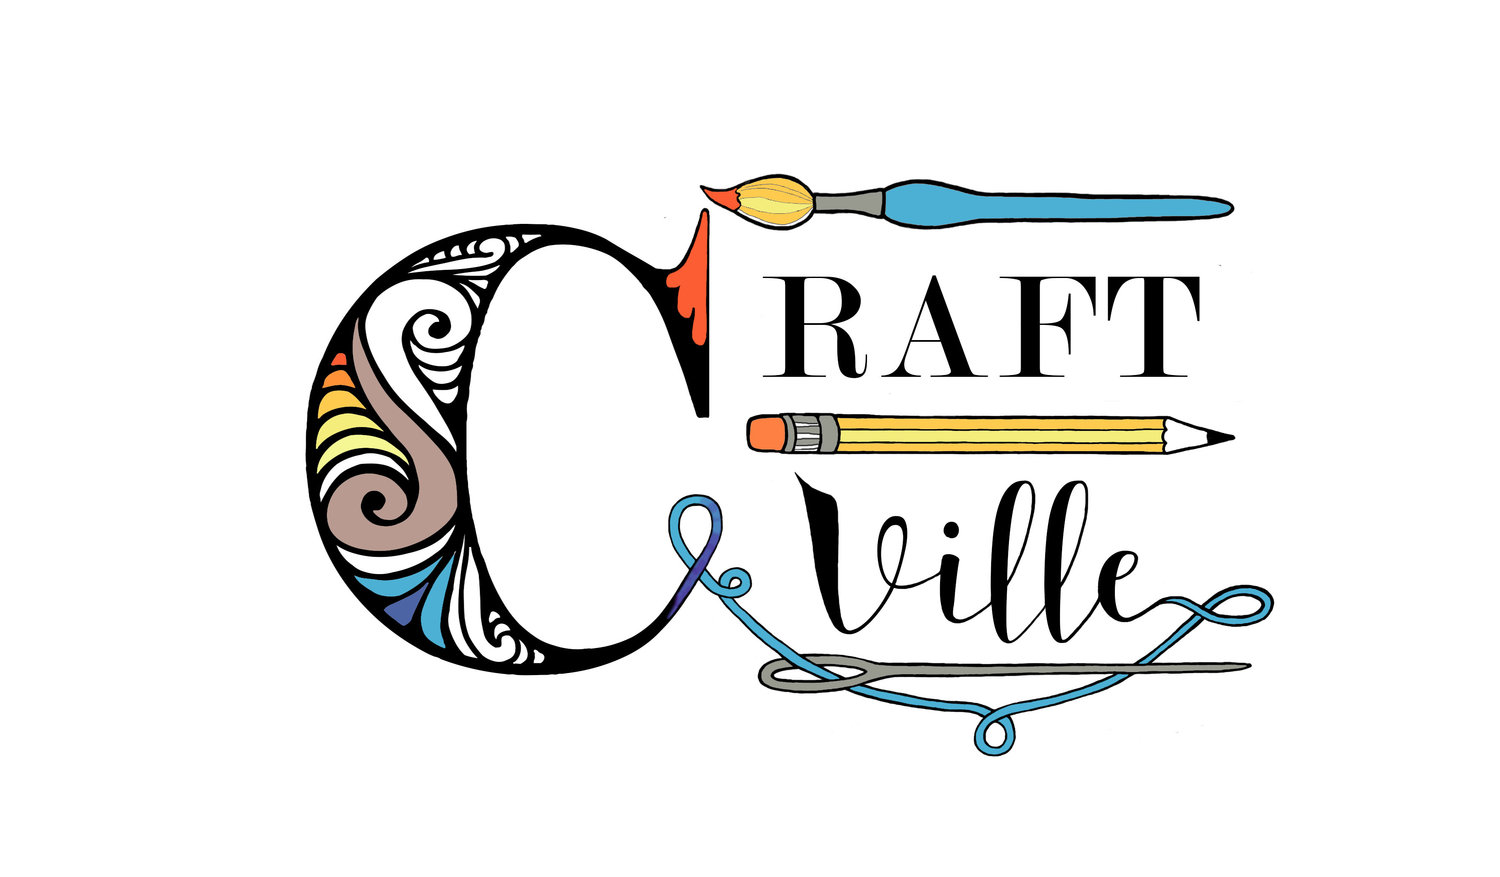 Craft Cville